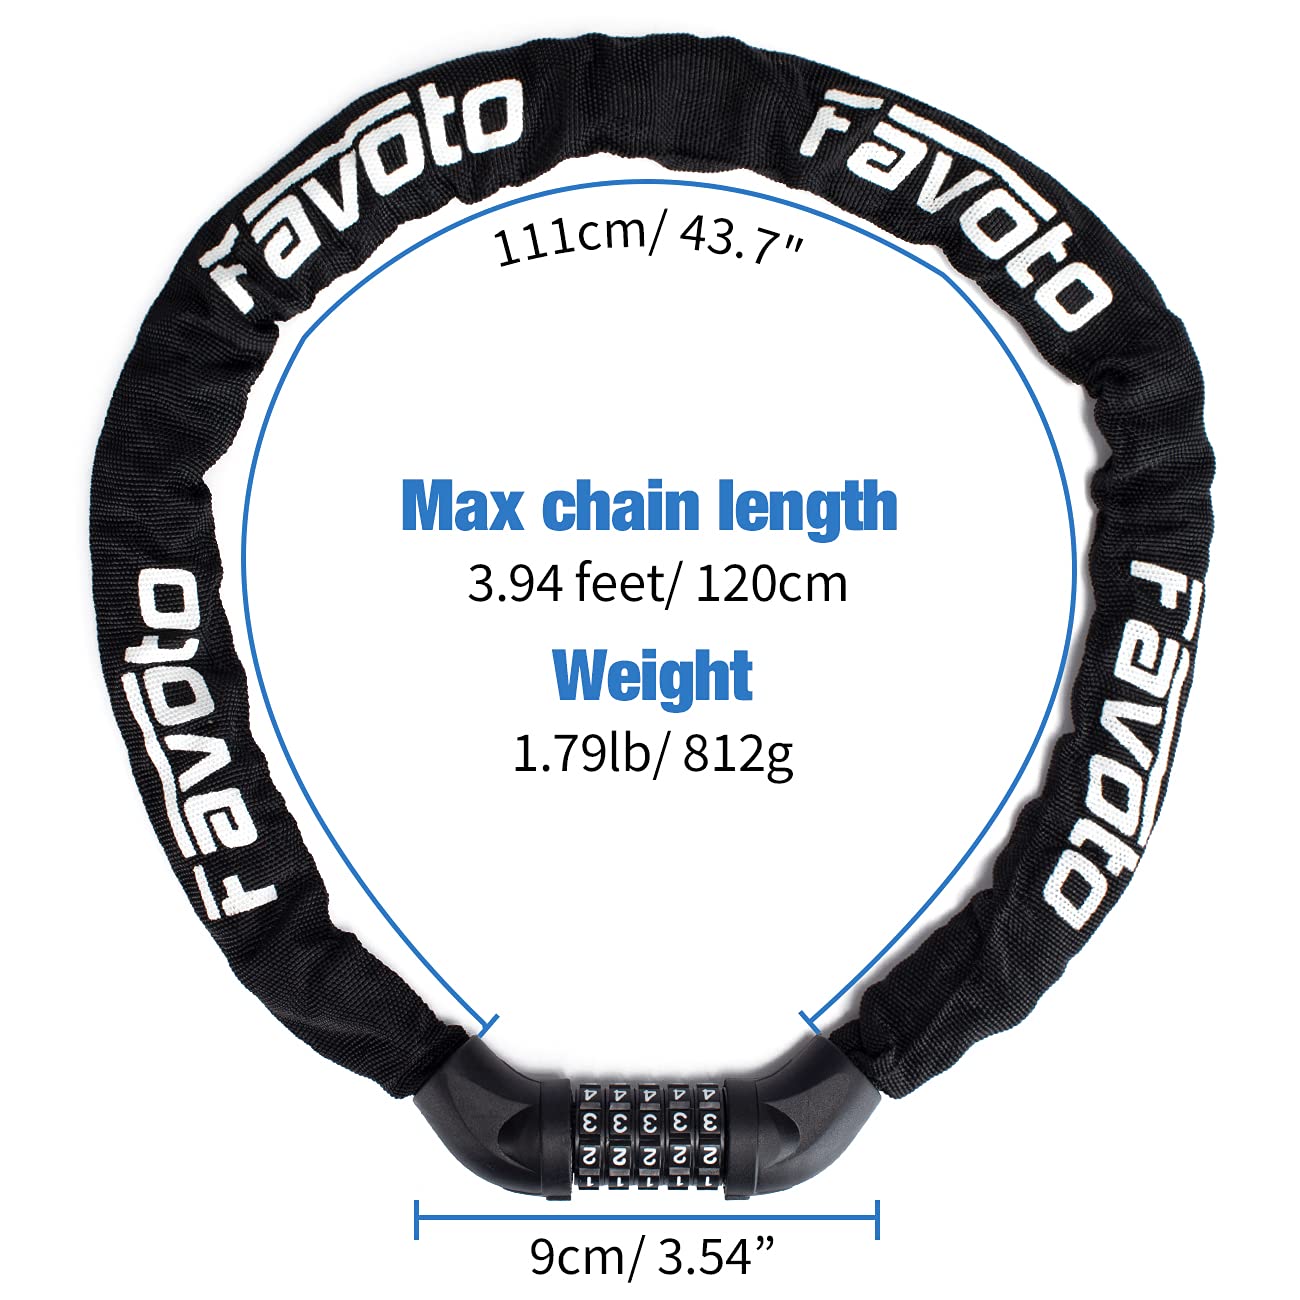 Favoto Bike Chain Lock--4ft